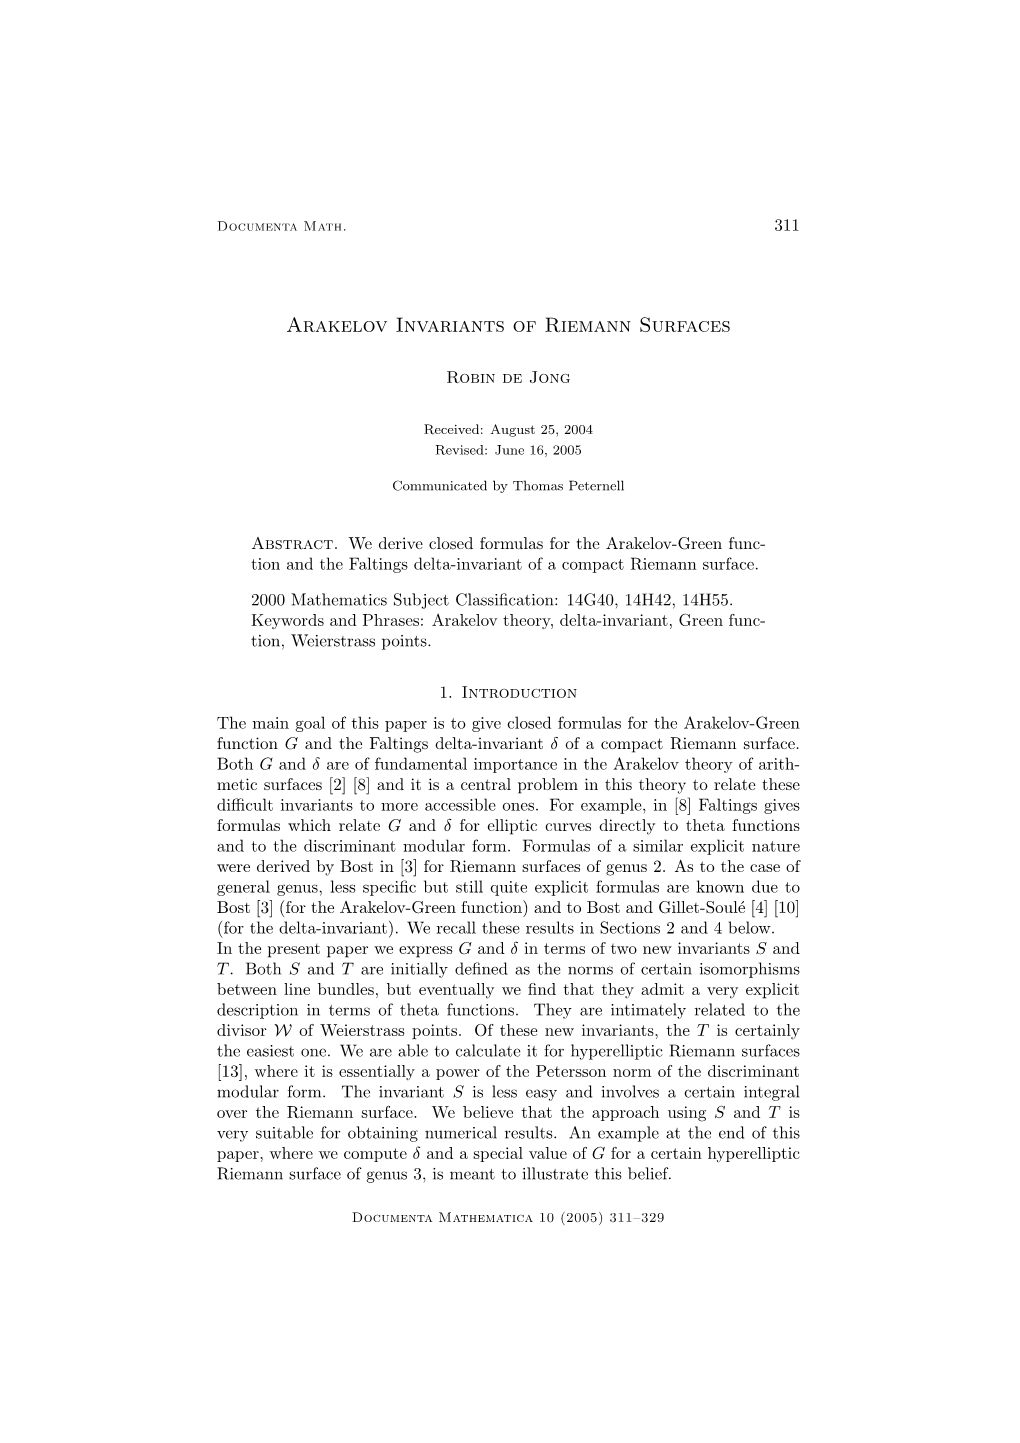 Arakelov Invariants of Riemann Surfaces